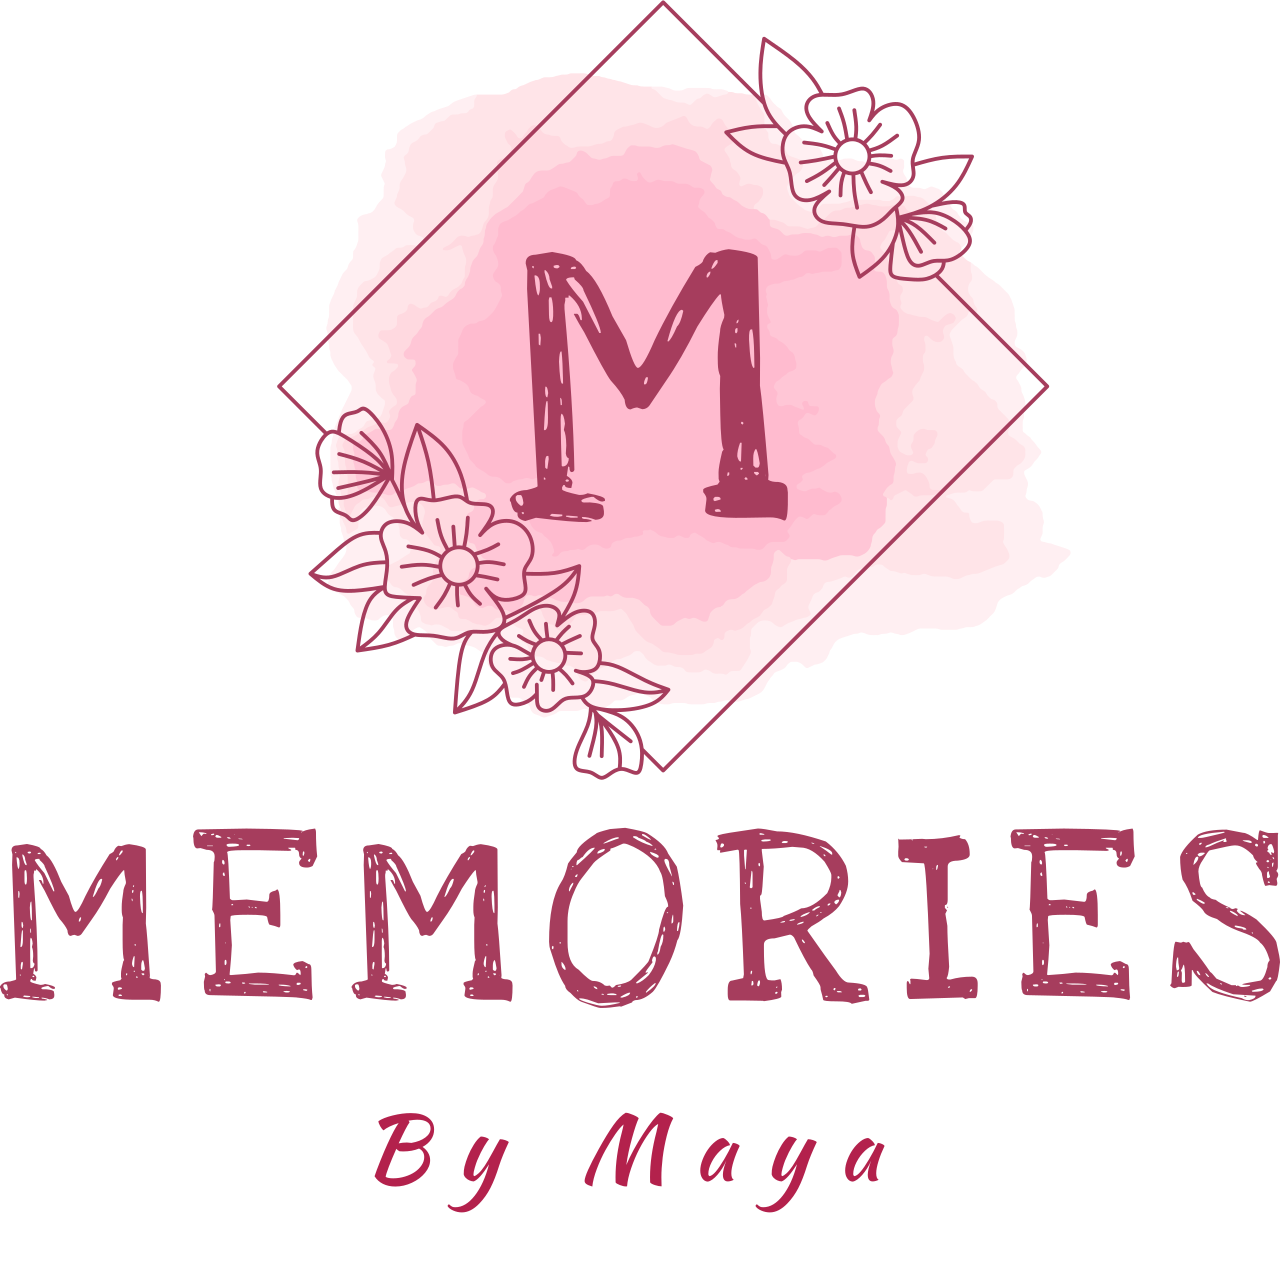 Memories by Maya's web page